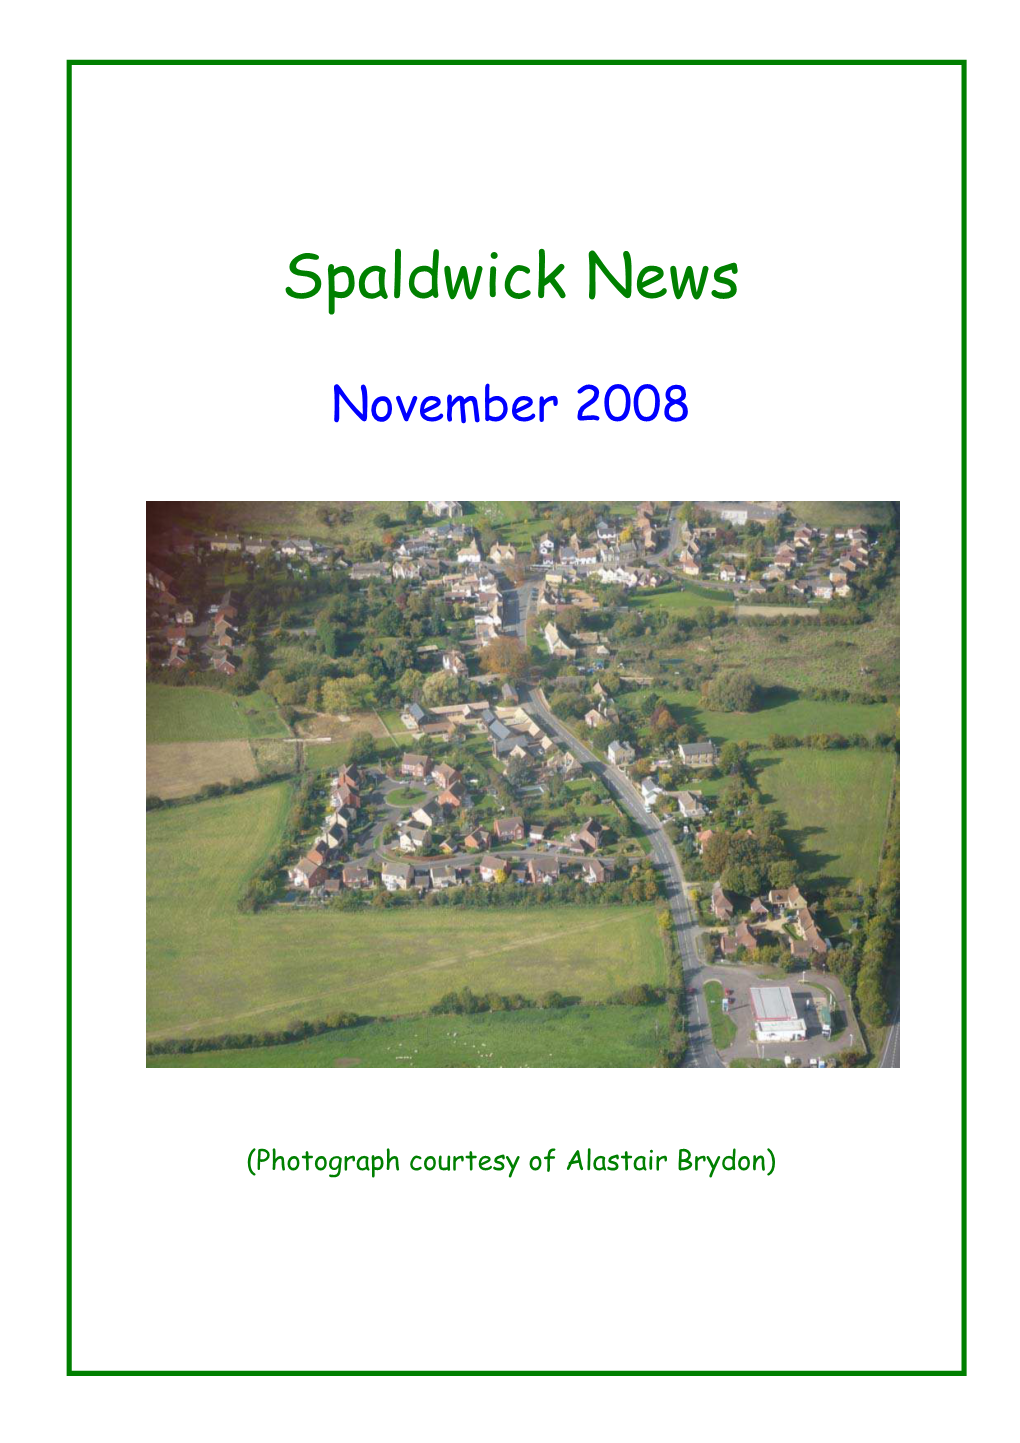 Spaldwick News